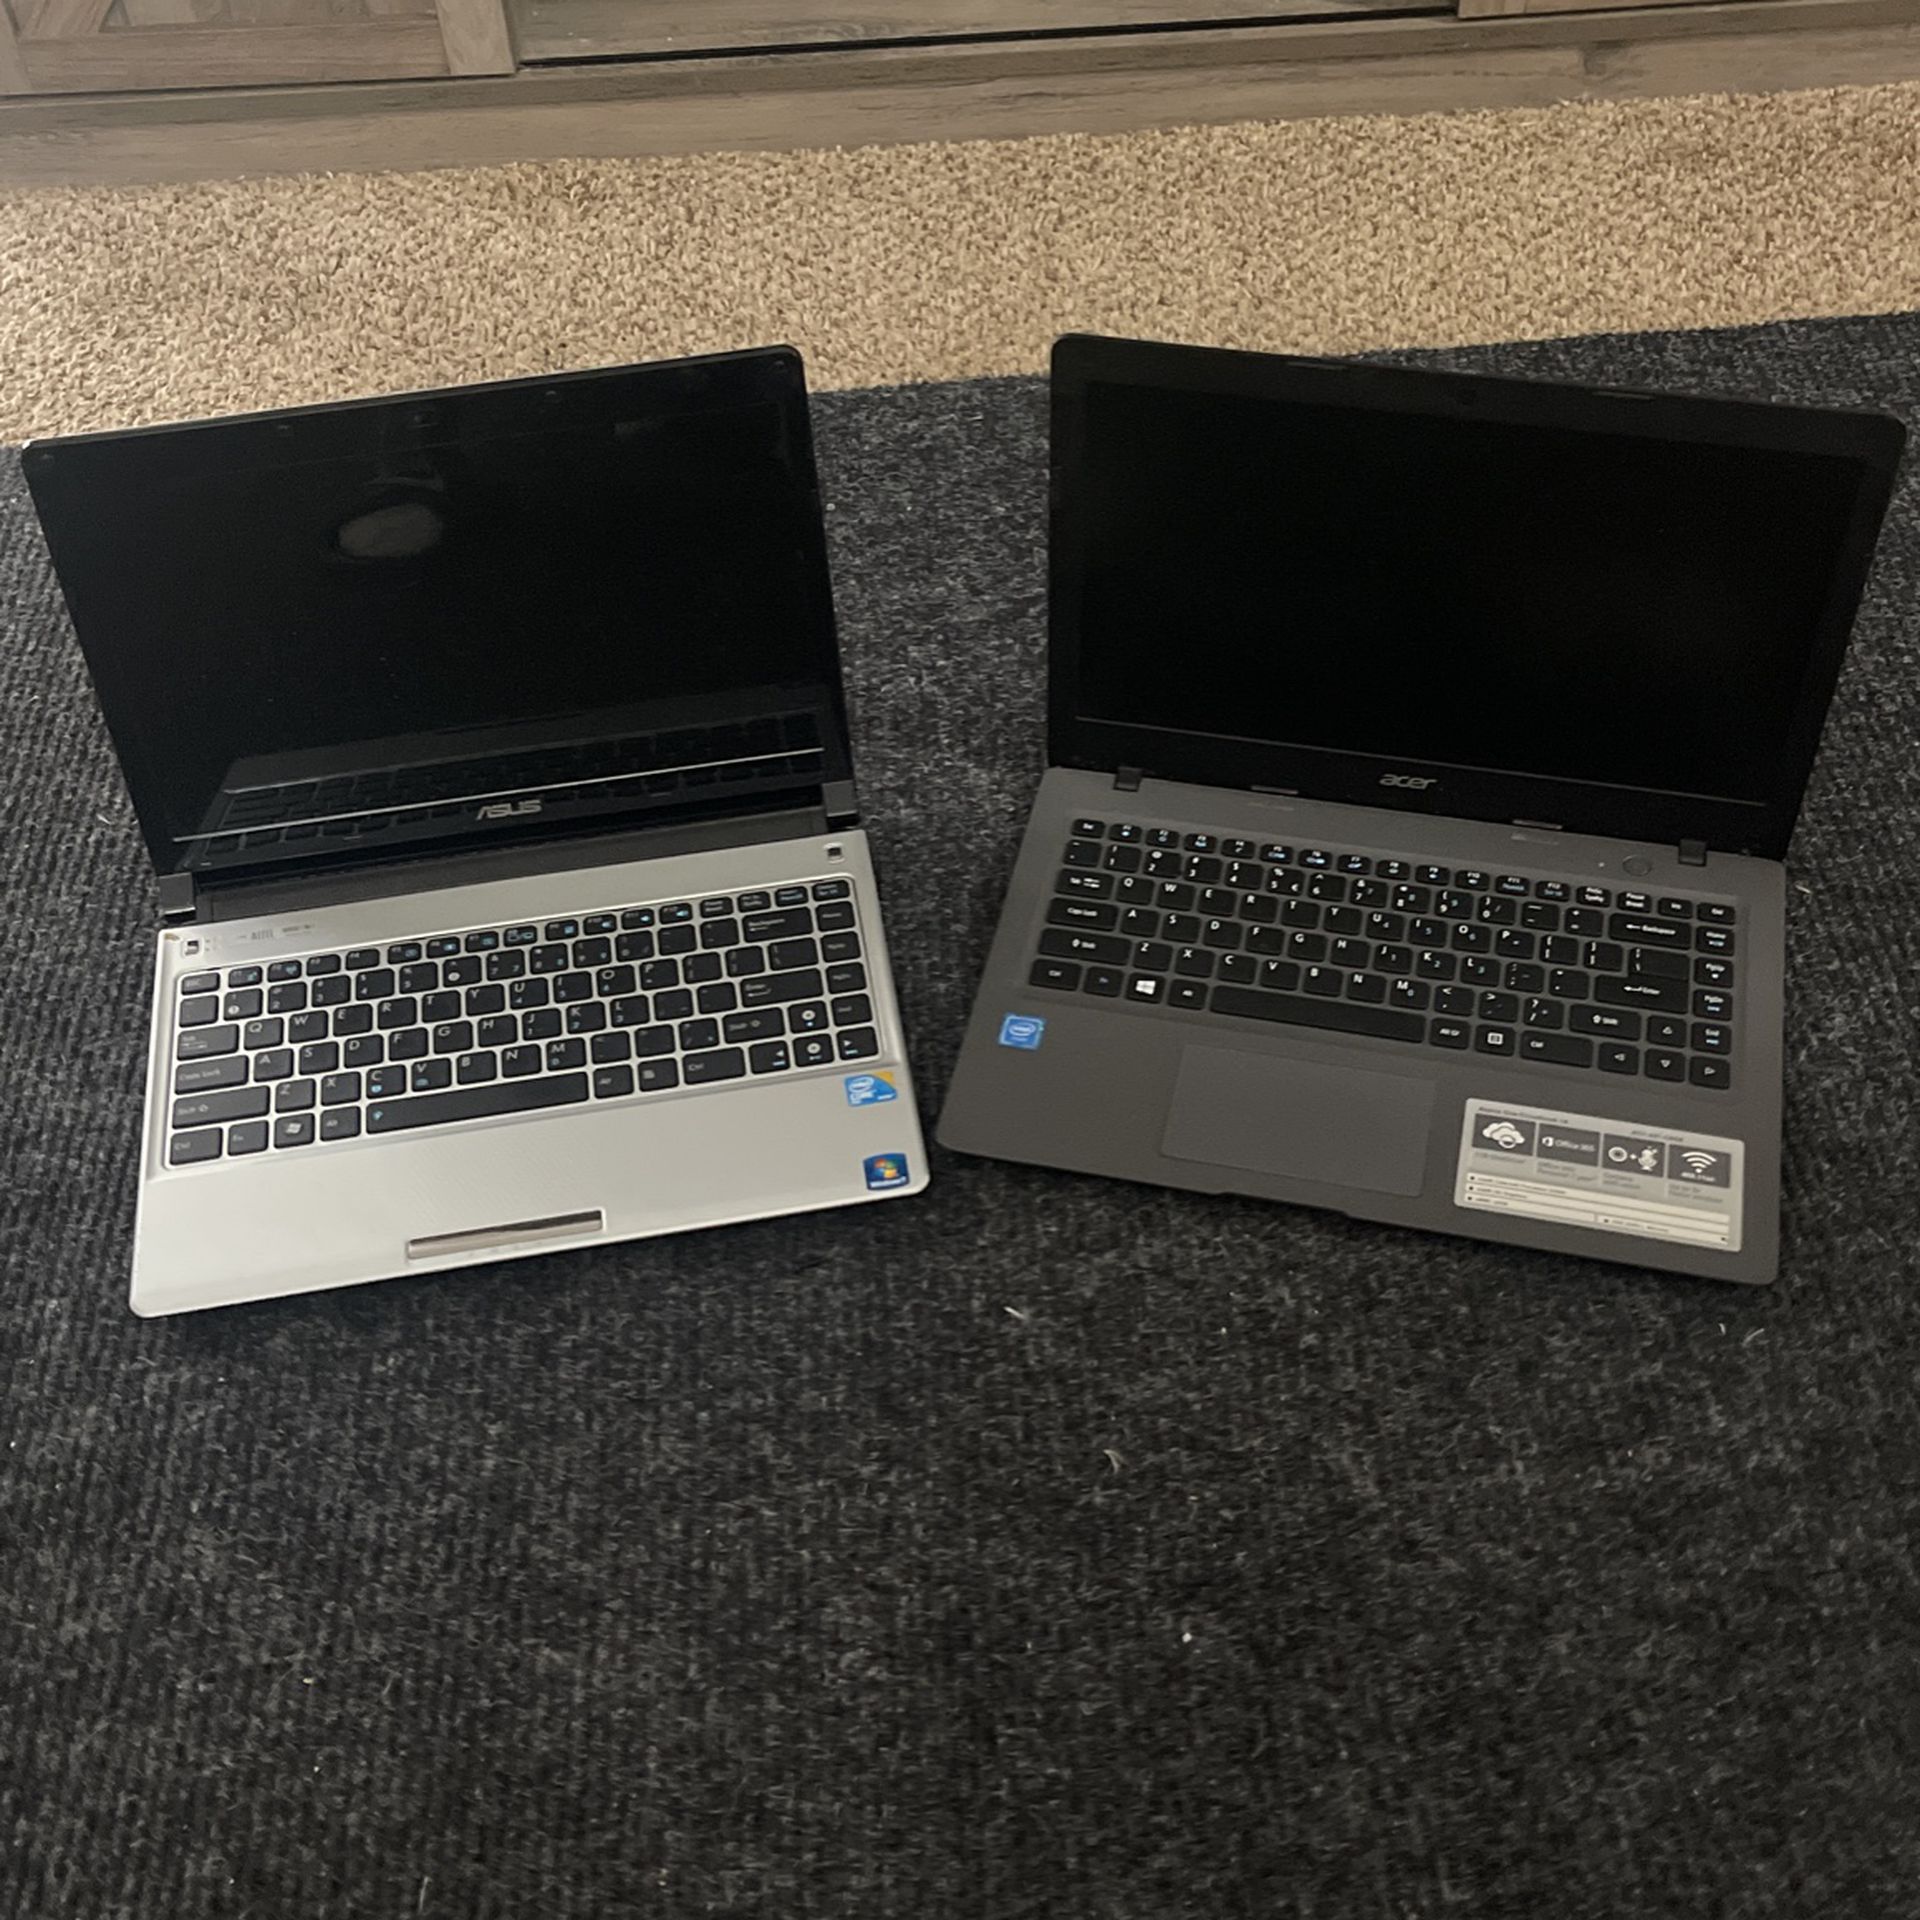 Laptops and IPad Mini